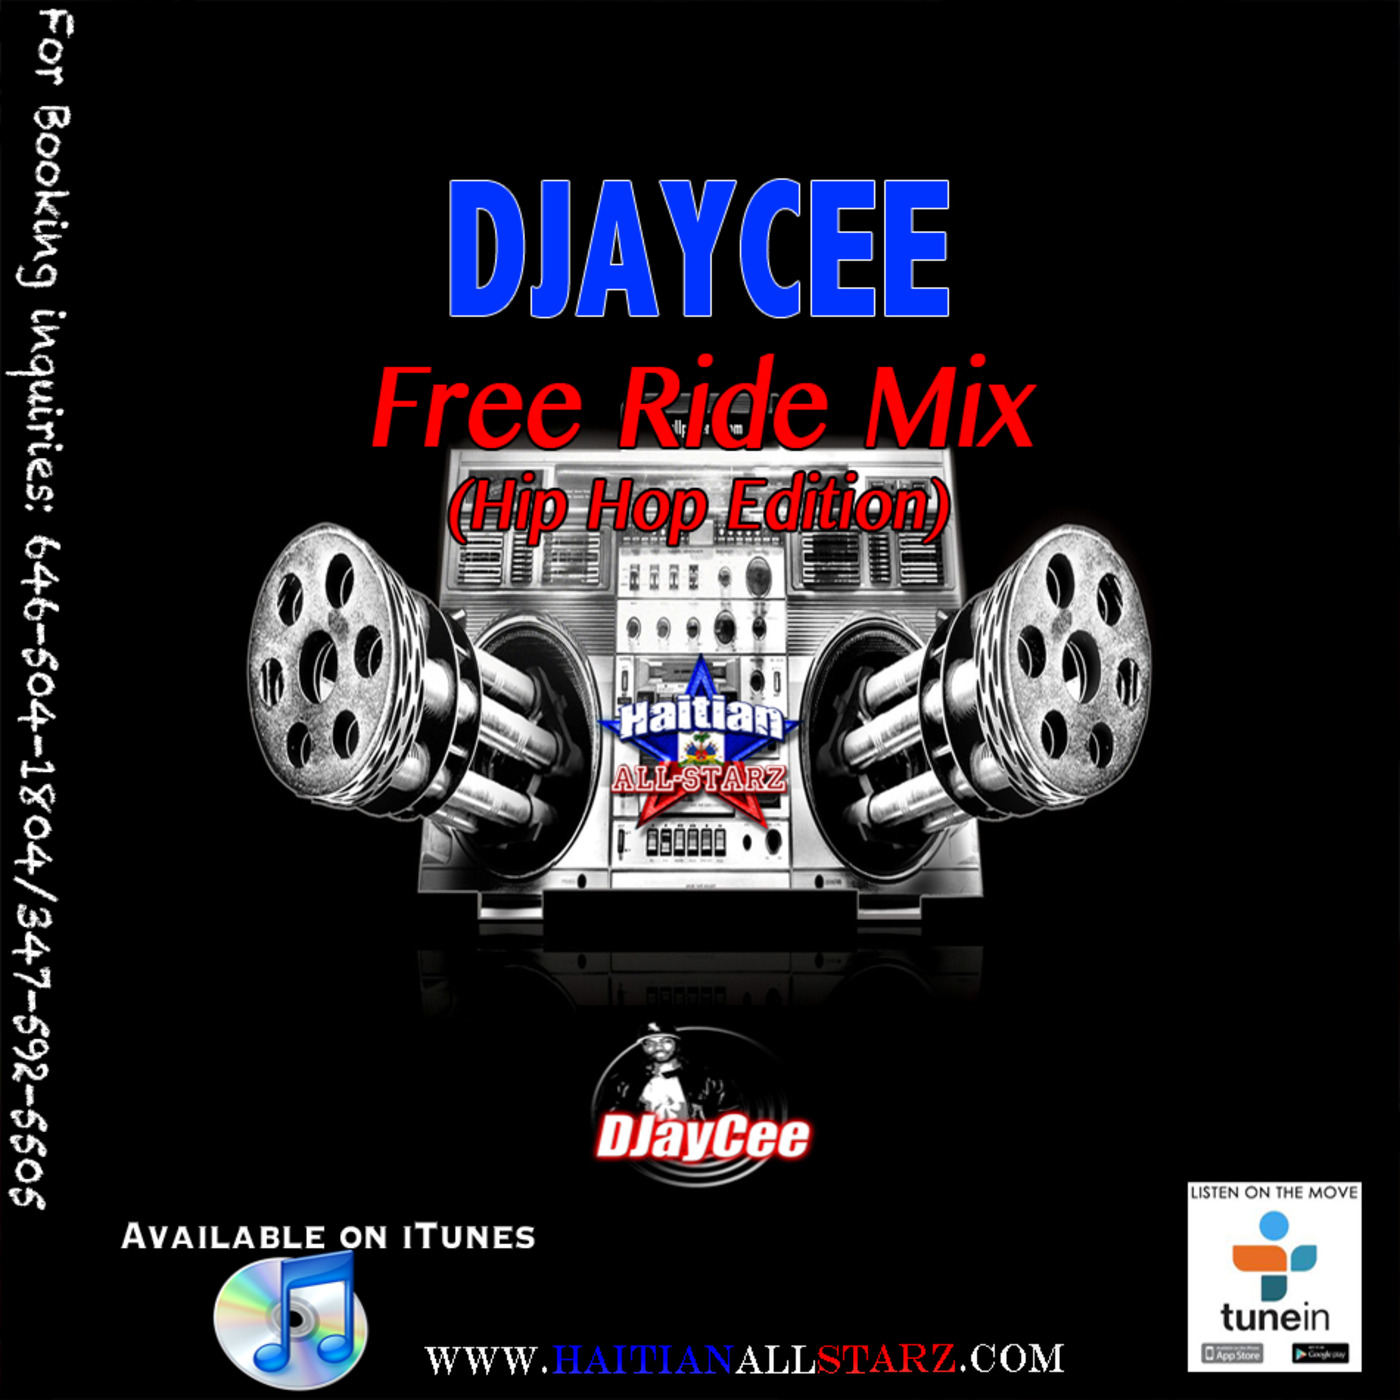 Free Ride Mix (Hip Hop Edition Part.3) - DJayCee {Haitian All-StarZ DJ}